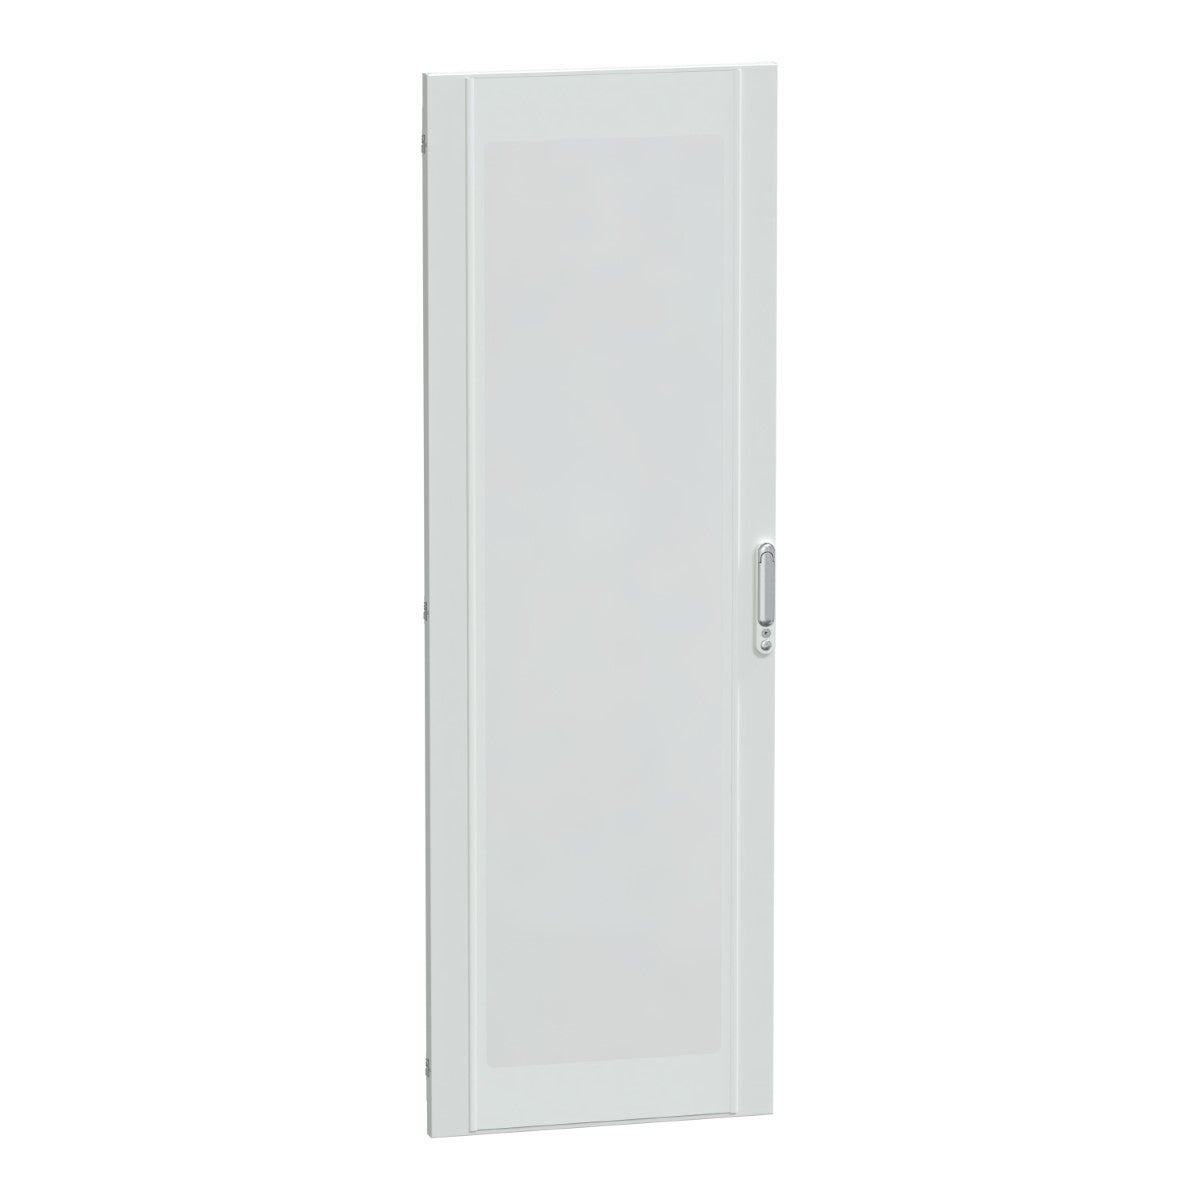 Door, PrismaSeT P, Floor-standing, transparent, reversible opening, 36M, W650, 3 locks, IP55, white, RAL 9003